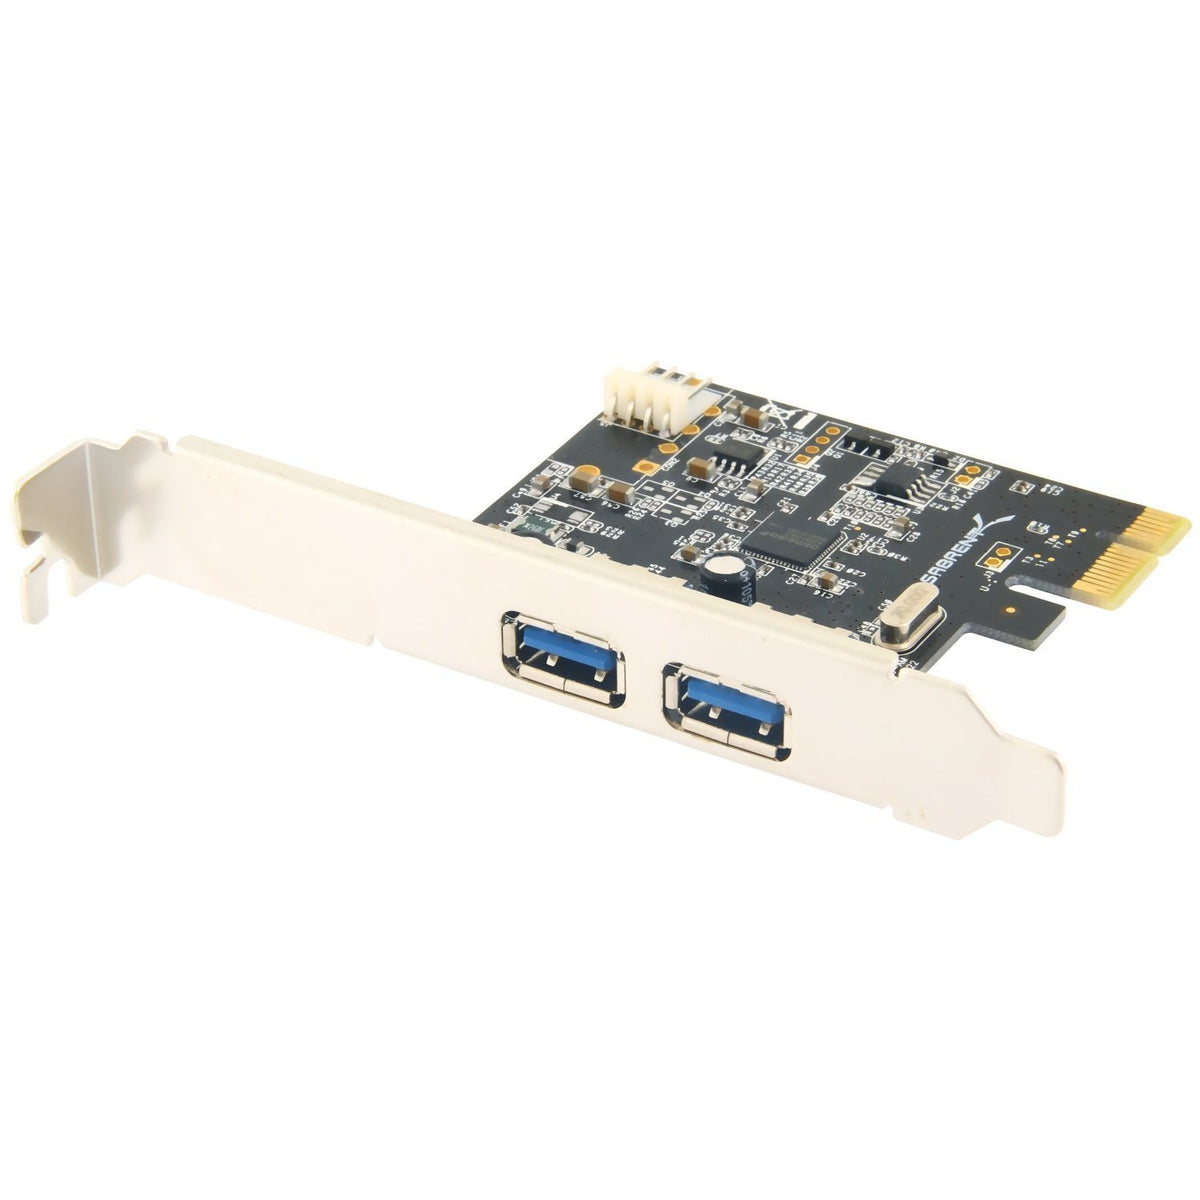 USB 3.0 2-port Desktop PCI Express Card Ð Transfer Rates Up To 5Gbps (PCIX-USB3)